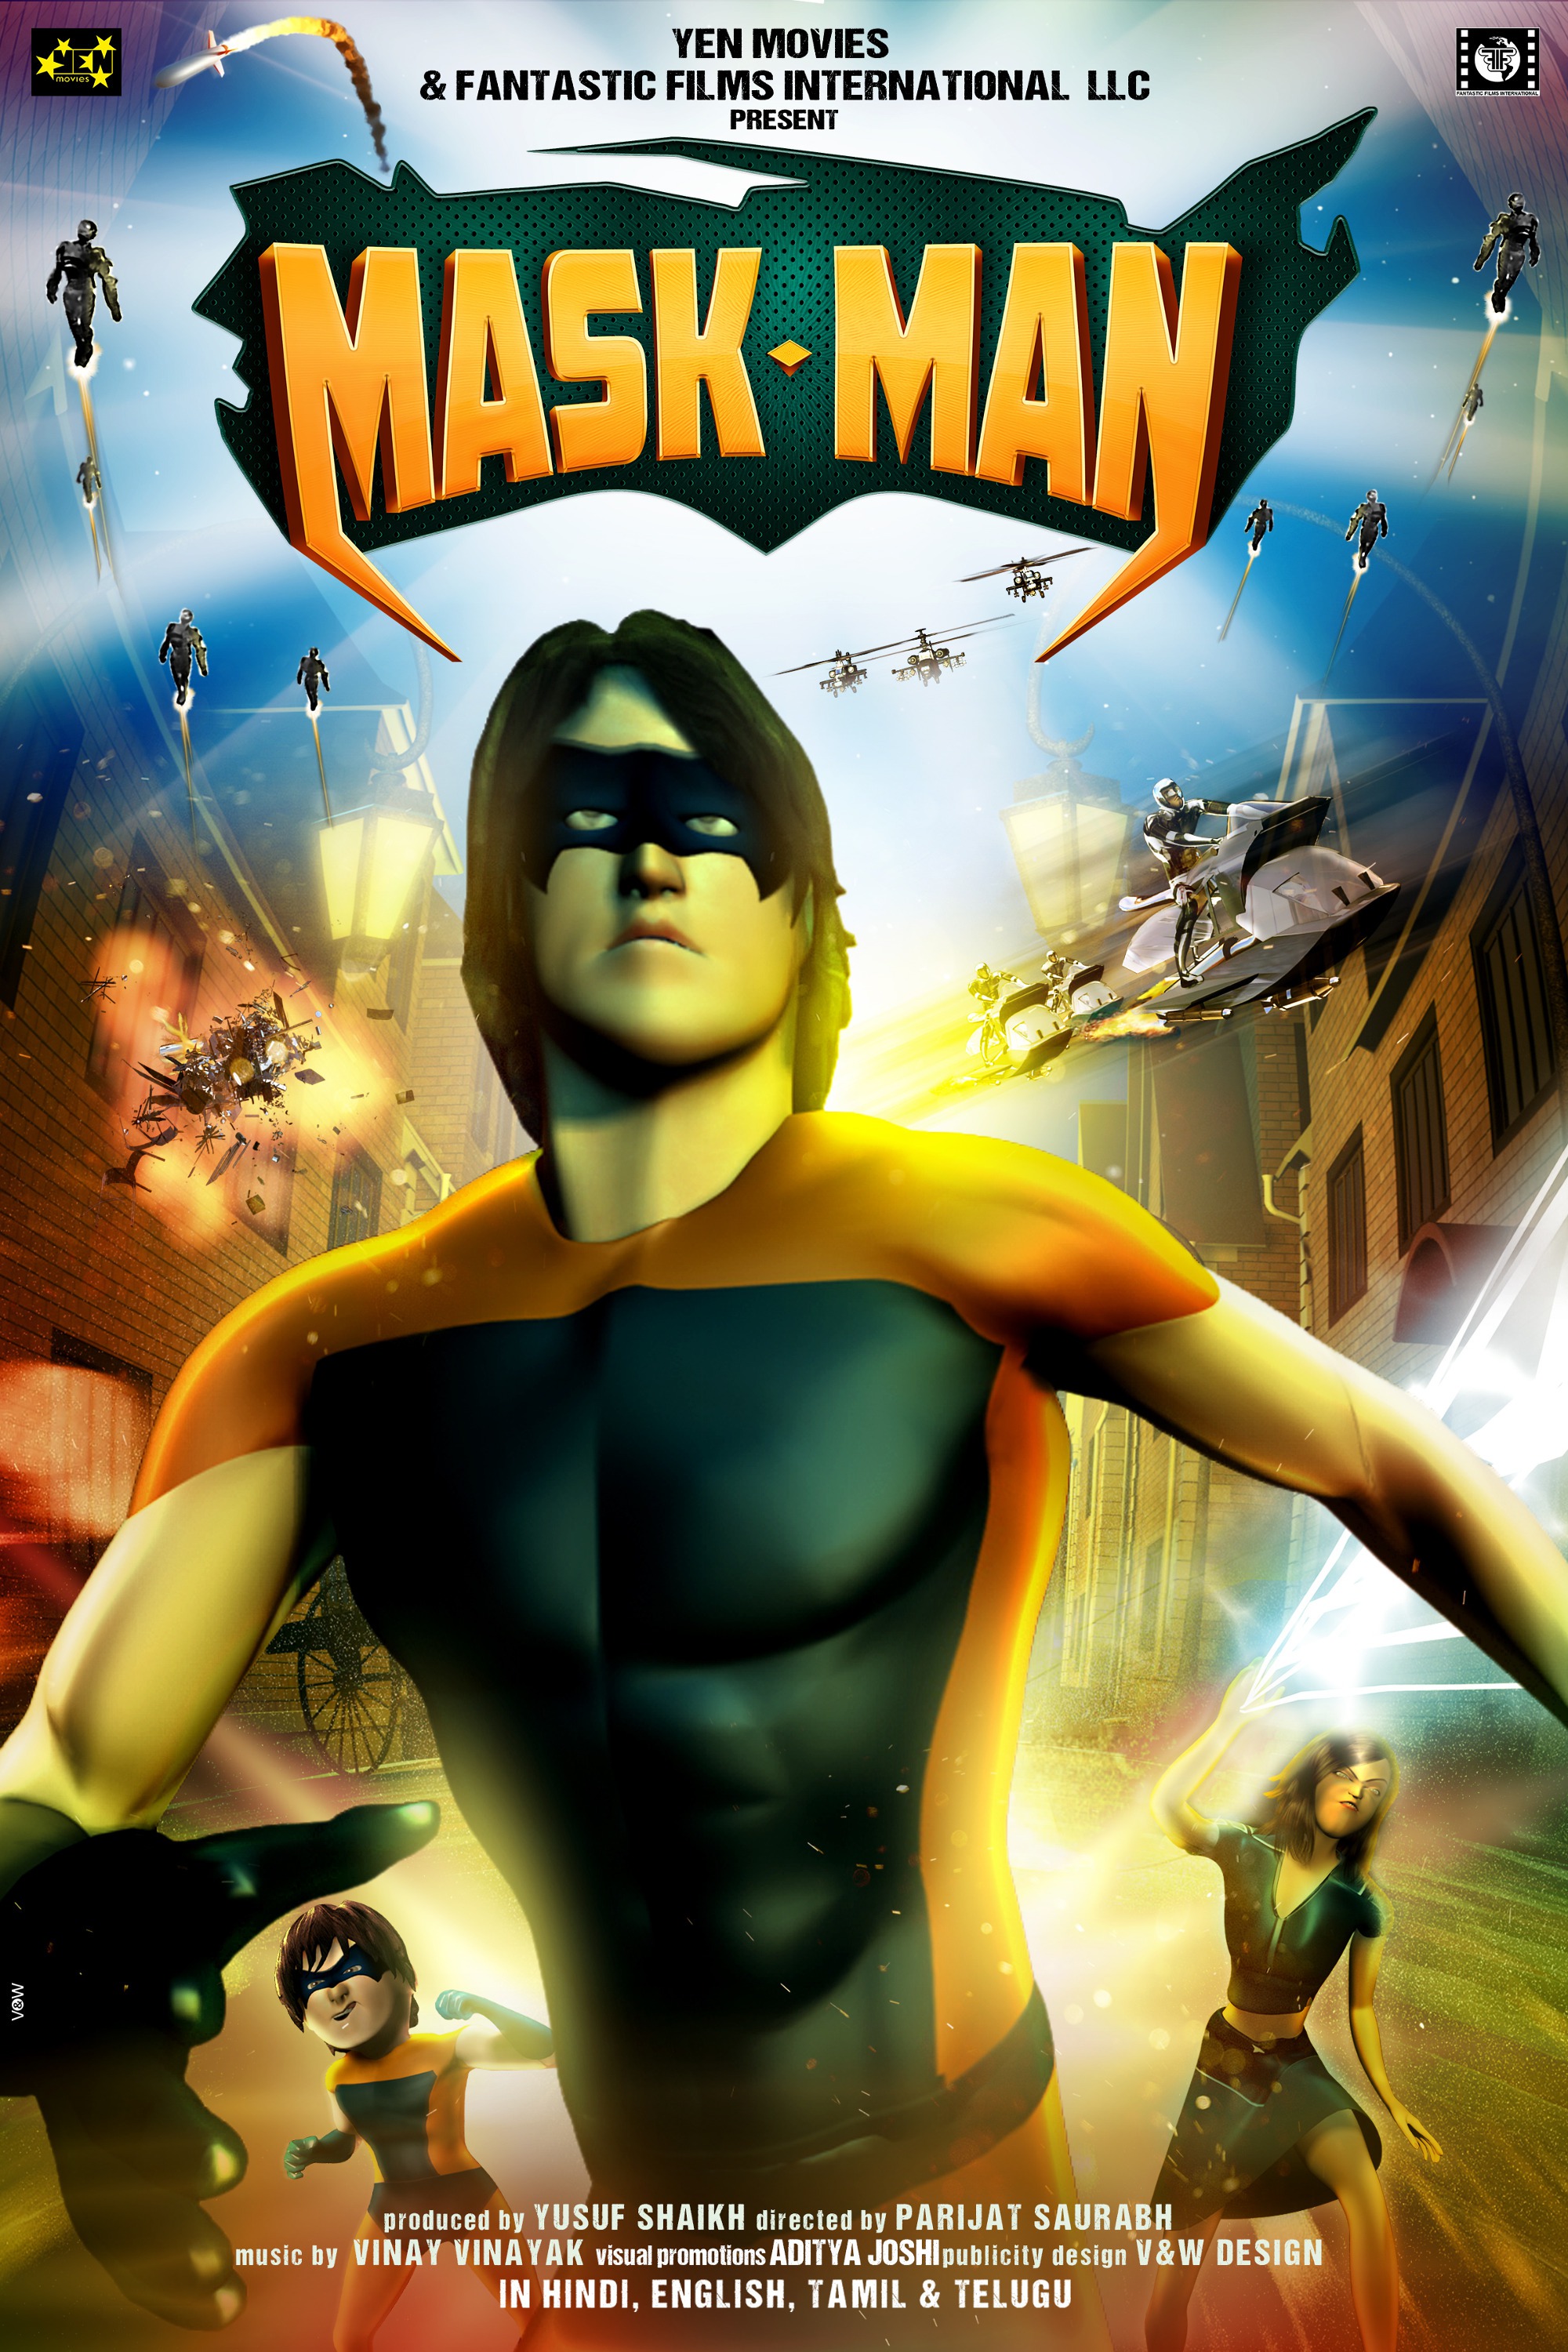 Mega Sized Movie Poster Image for Mask-Man (#1 of 2)